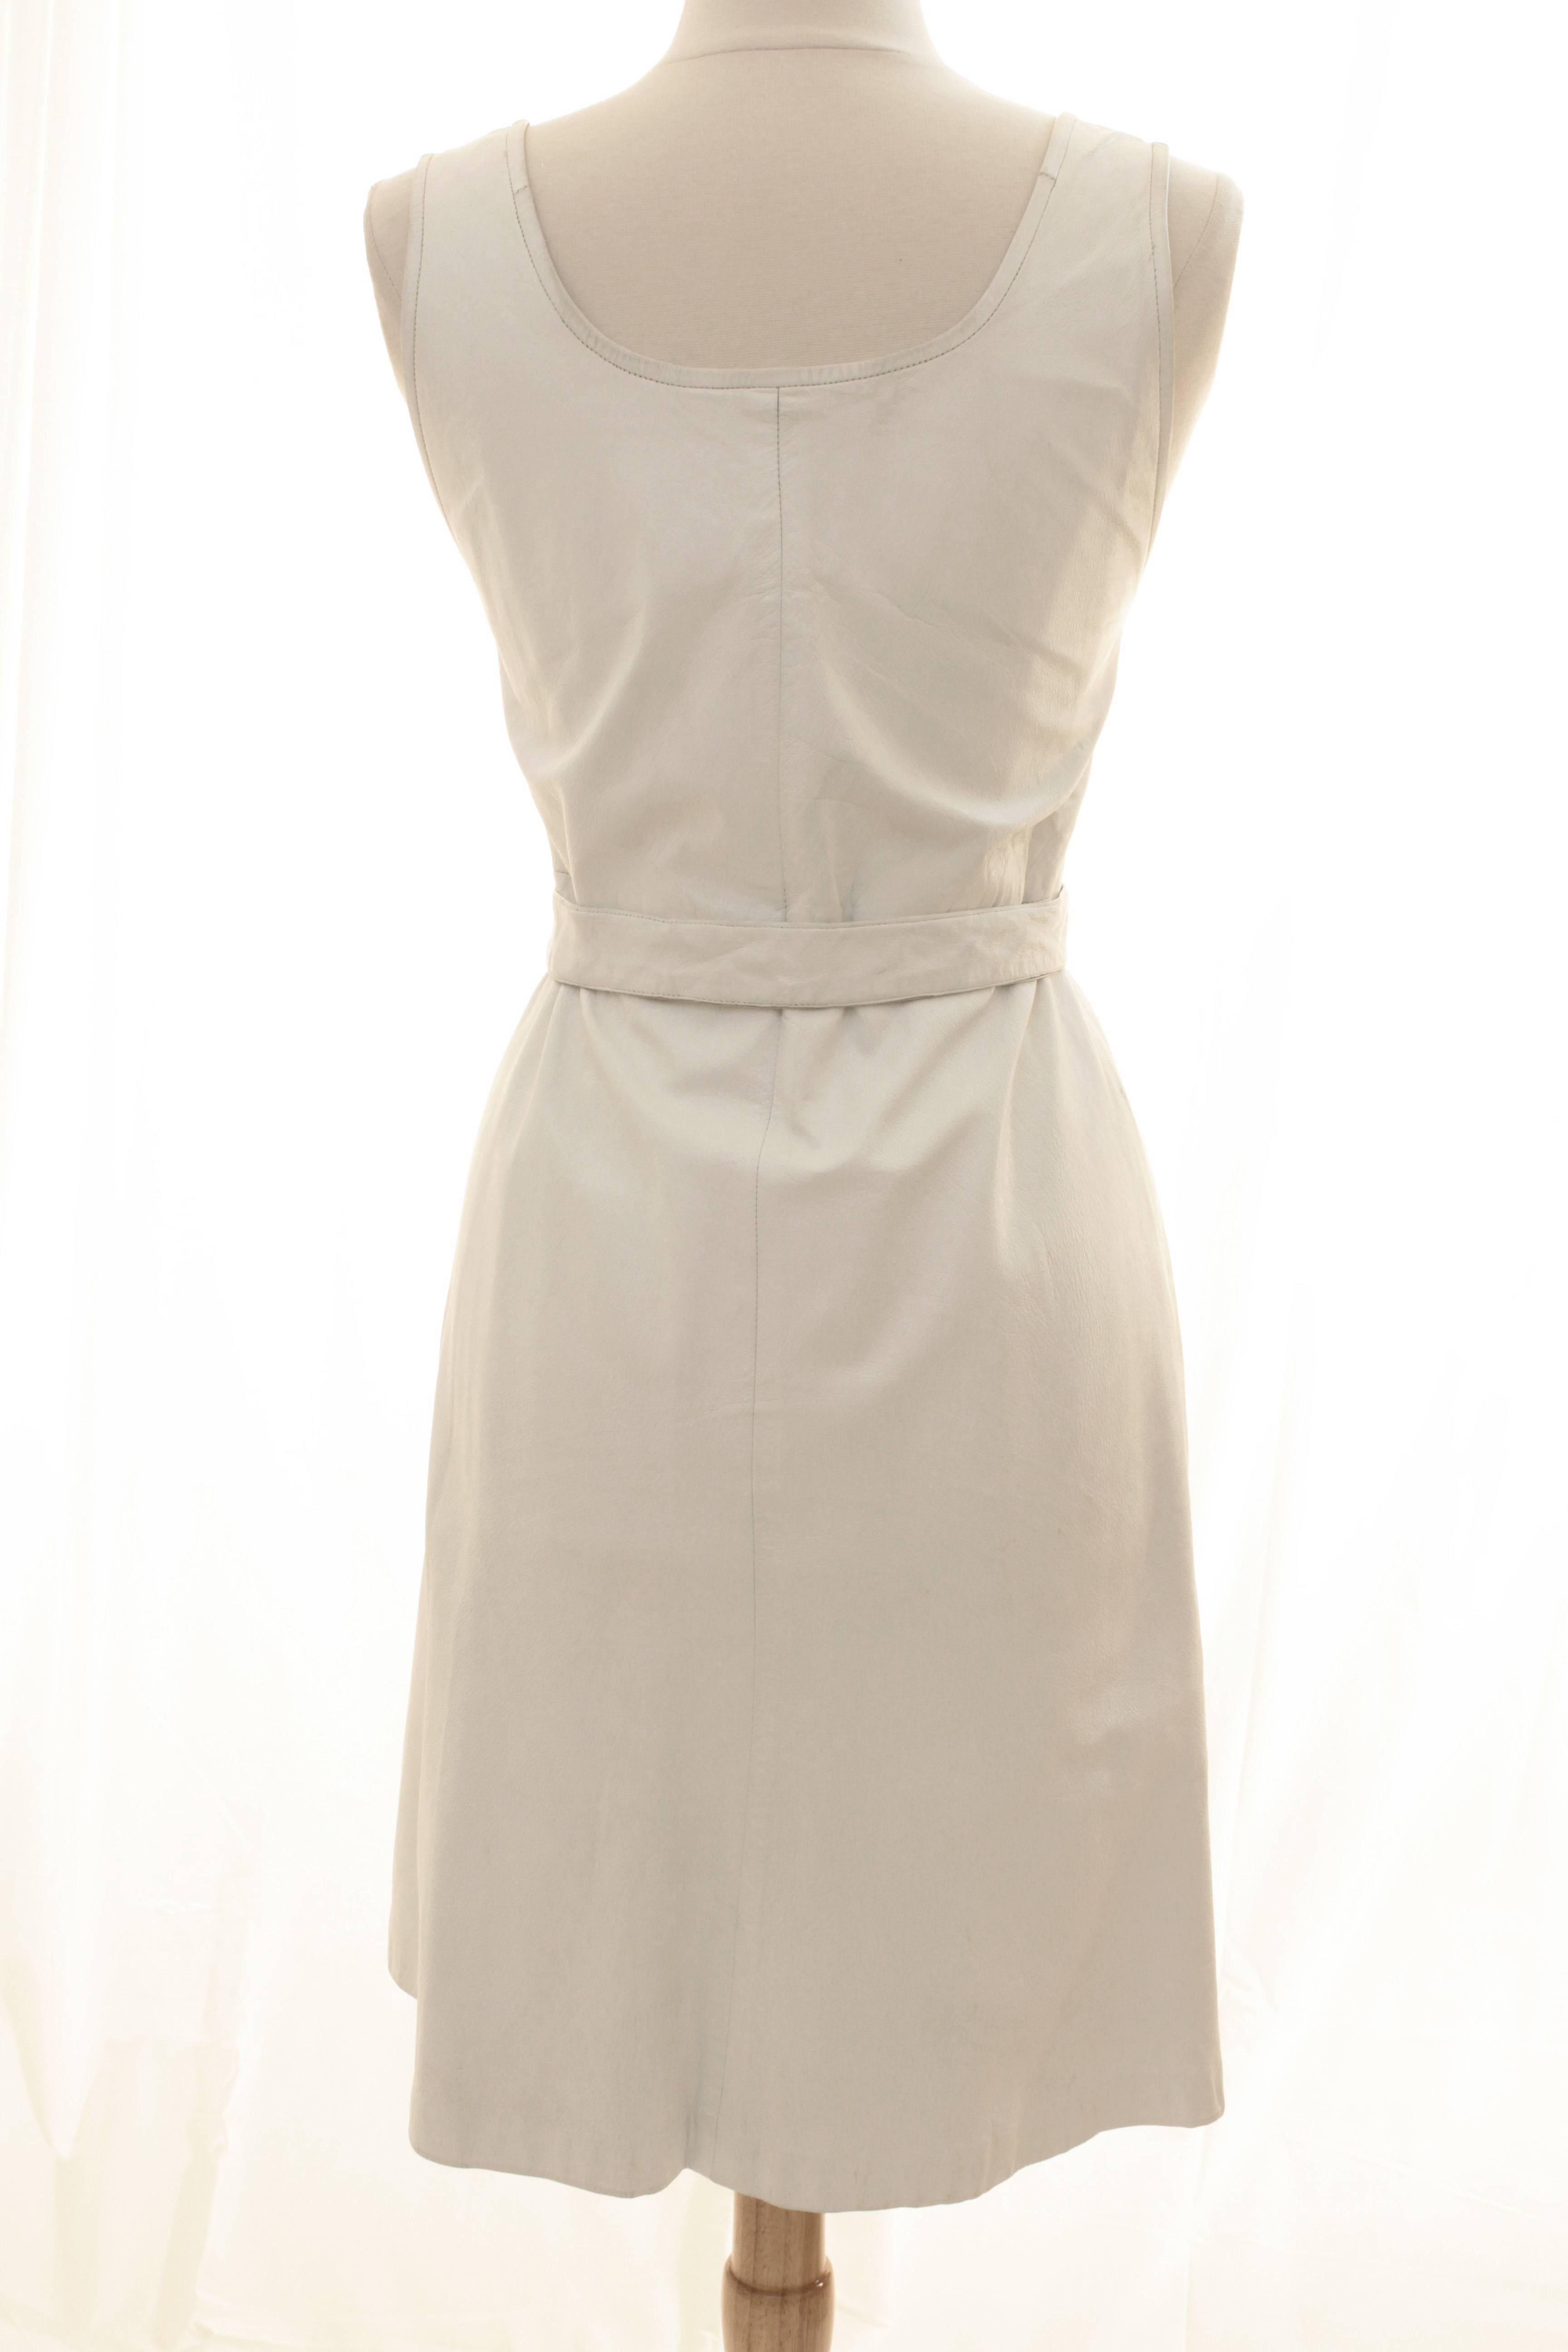 Women's Mod Bonnie Cashin White Leather Mini Dress Set with Matching Belt & Gloves 60s M